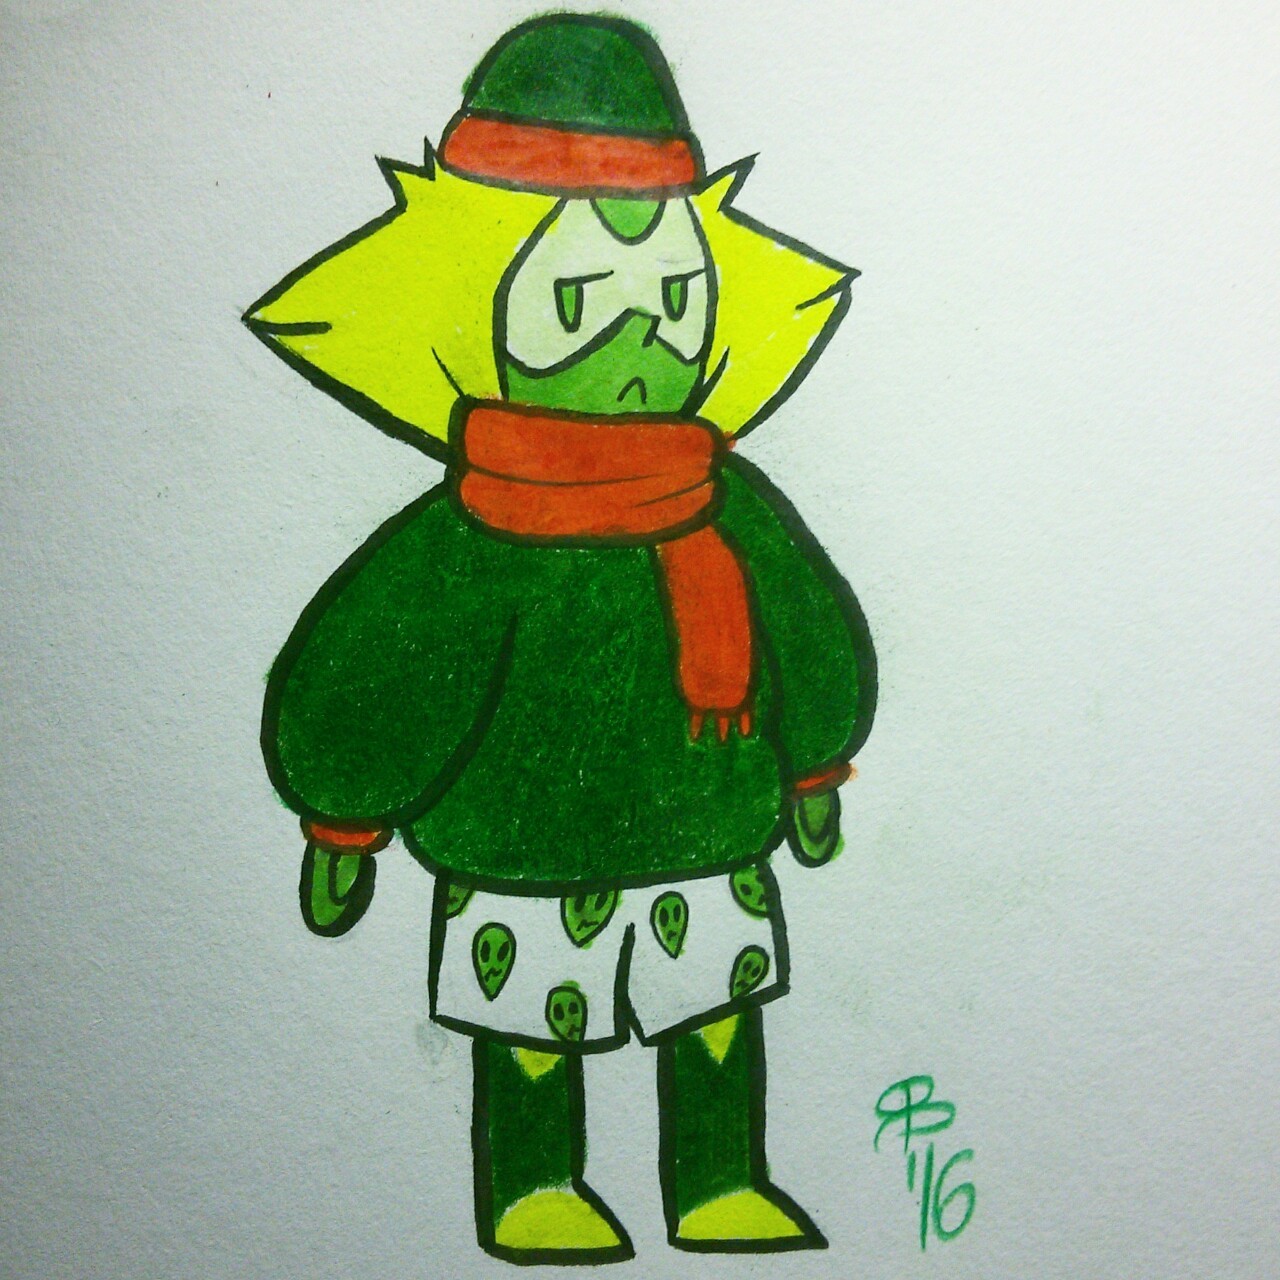 Cute Peri in her non-opptional winter wear provided by Steven